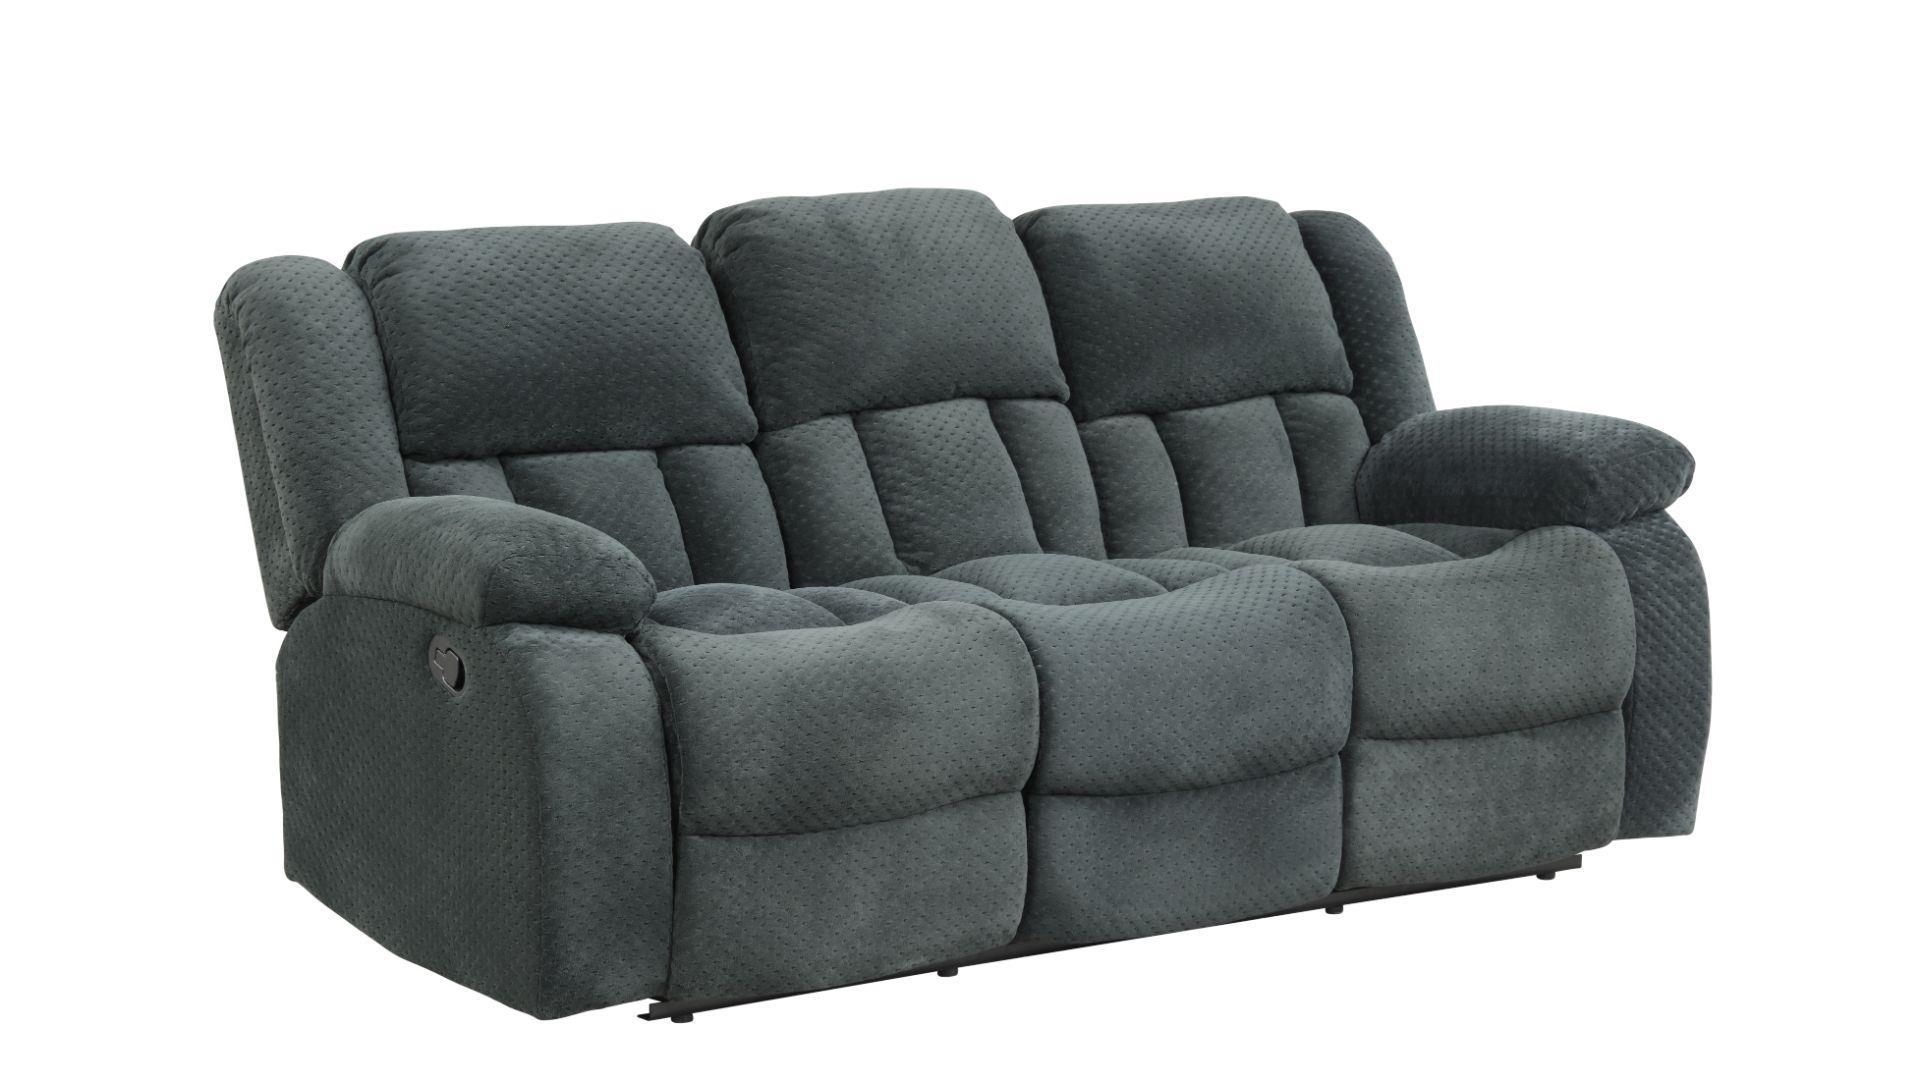 Galaxy Home Furniture ARMADA Green Recliner Sofa